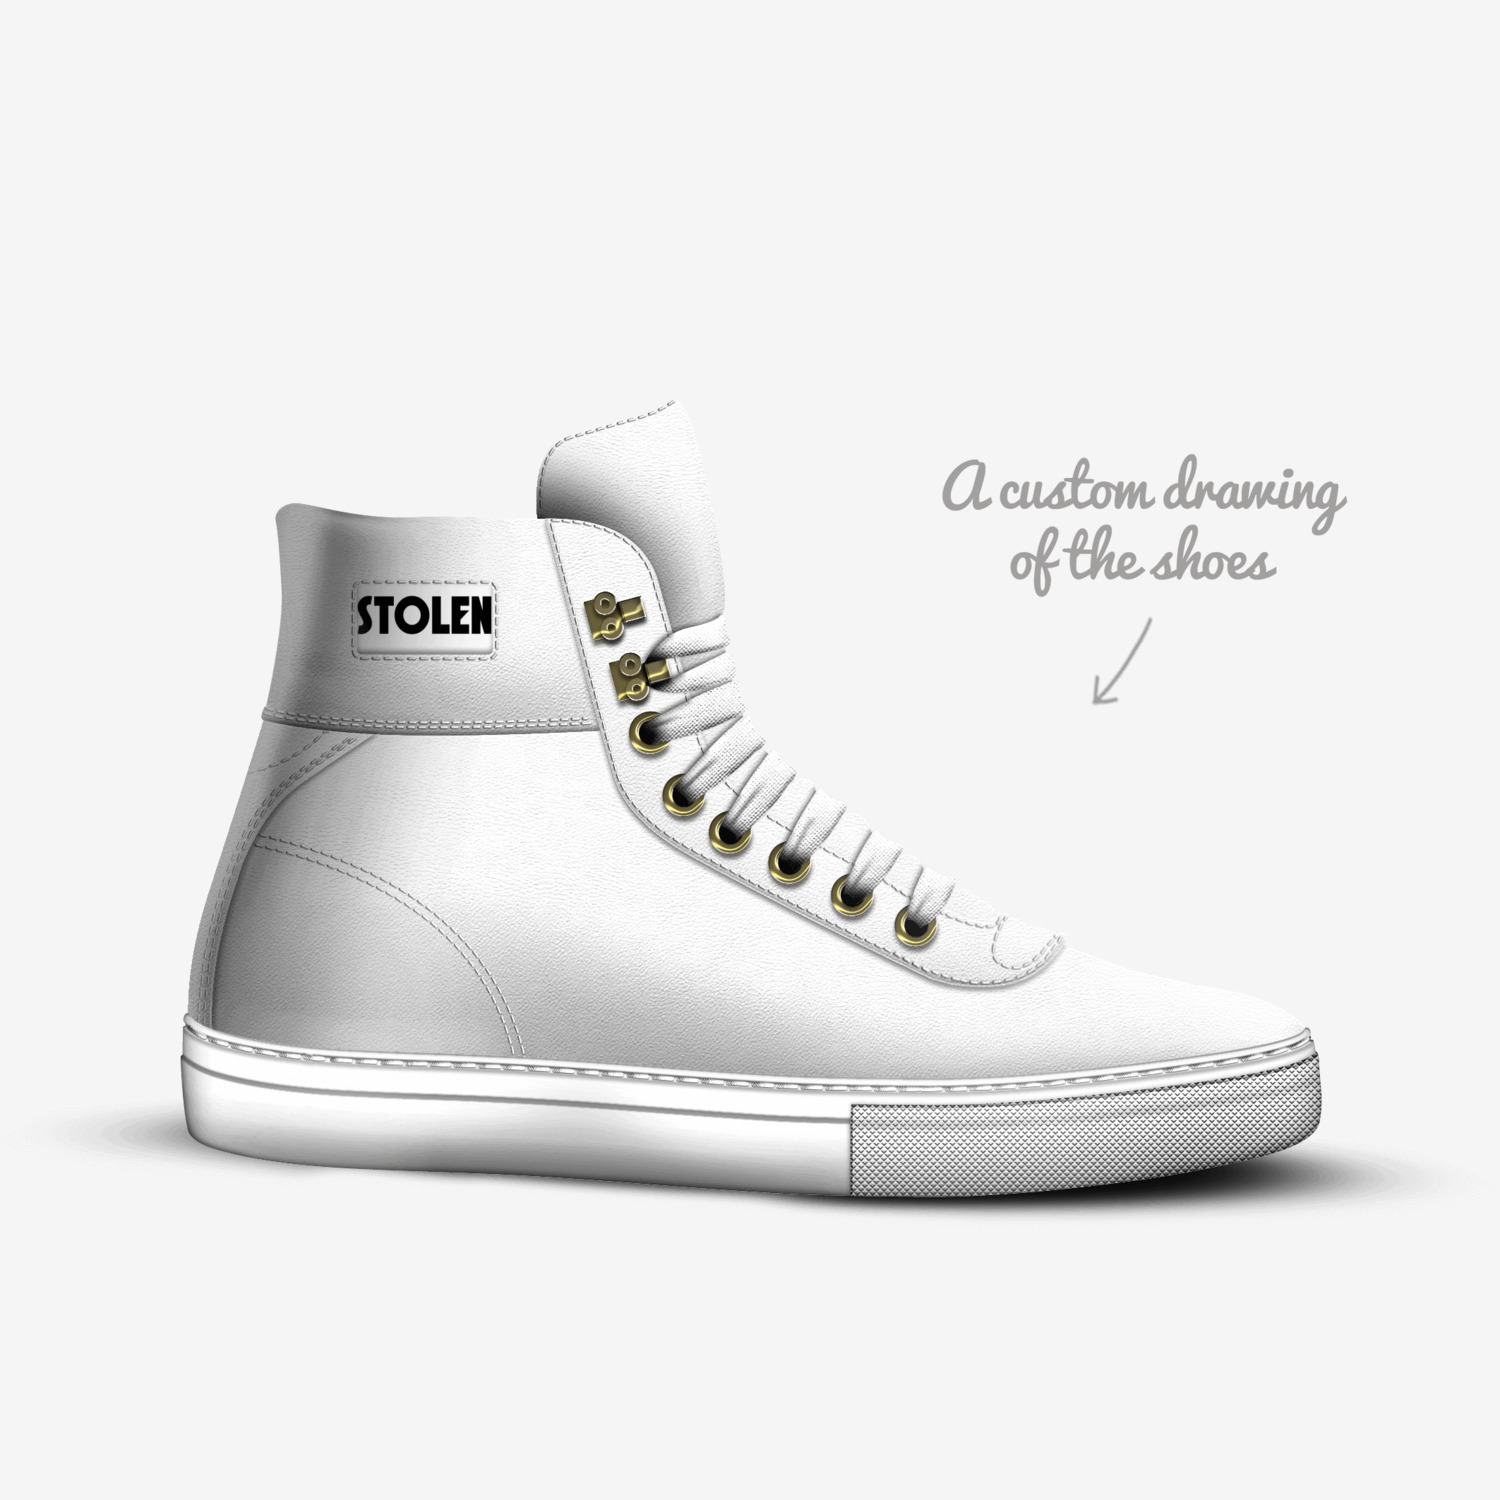 Stolen | A Custom Shoe concept by John Aymes